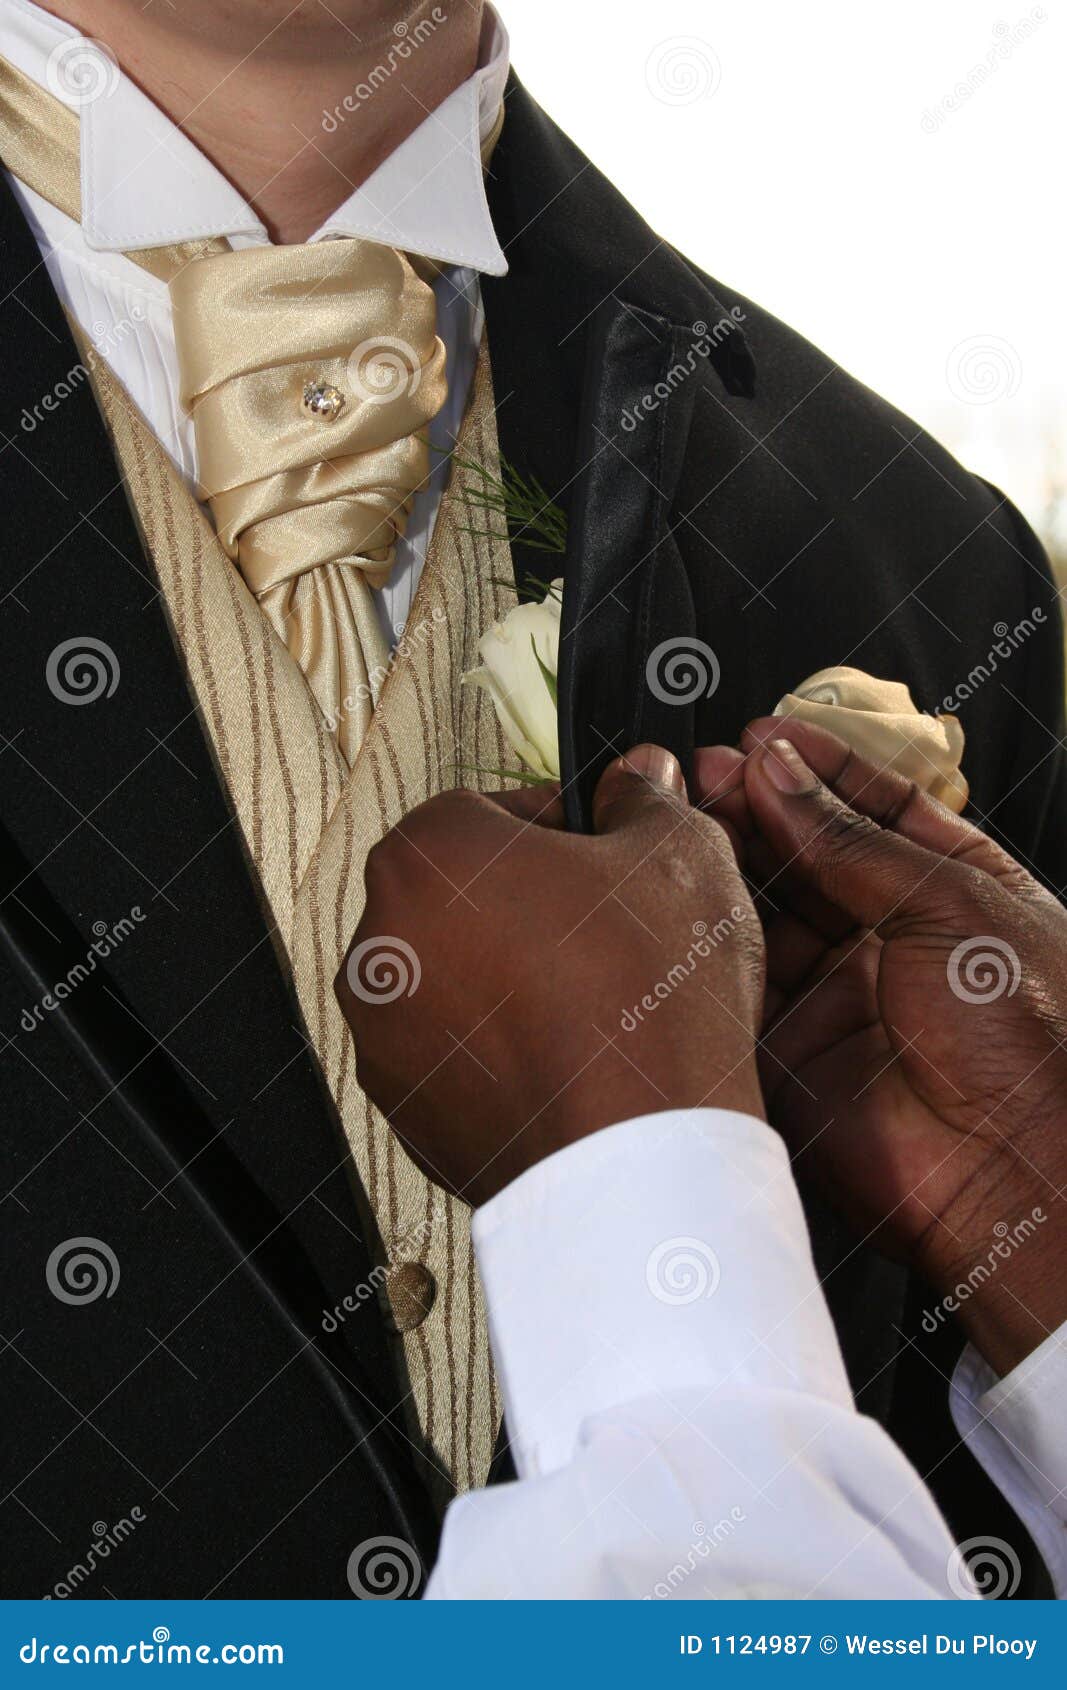 pinning rose on suit